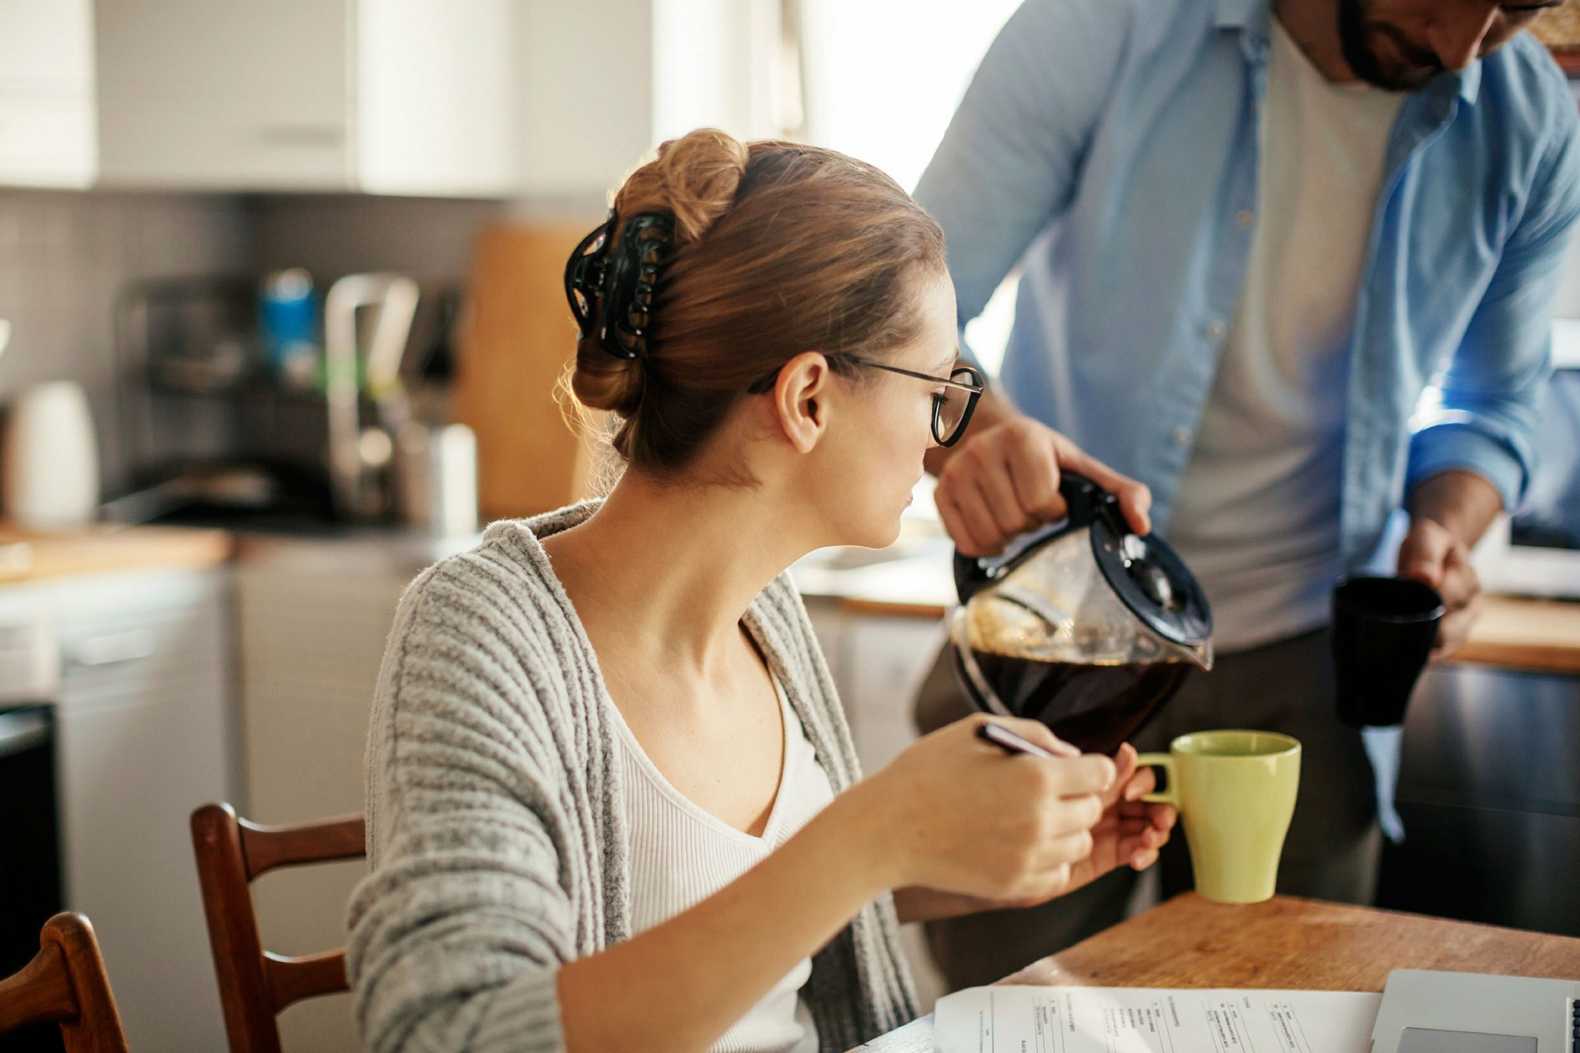 Abnormal Tips Bad Habits Caffeine Unhealthy Diet